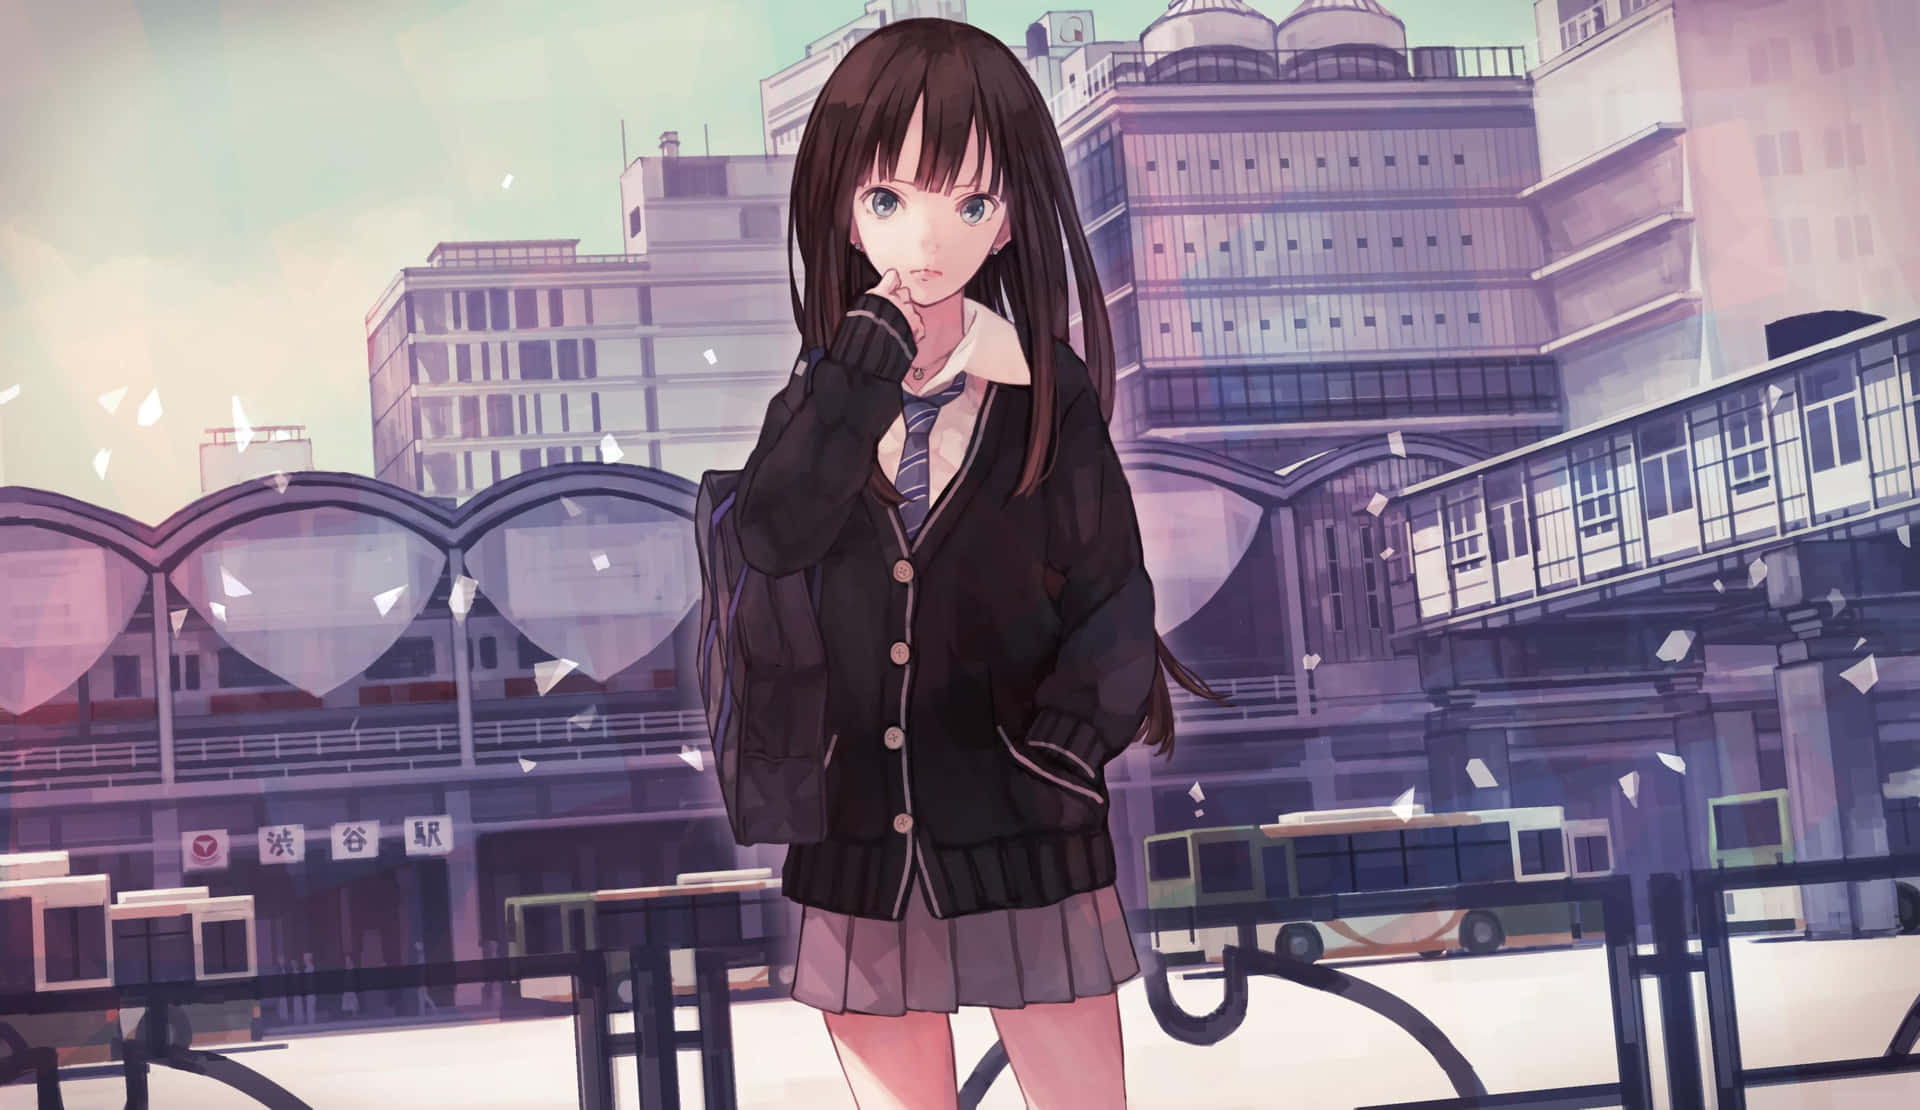 Cute Anime Girl With Uniform Desktop Artwork Wallpaper